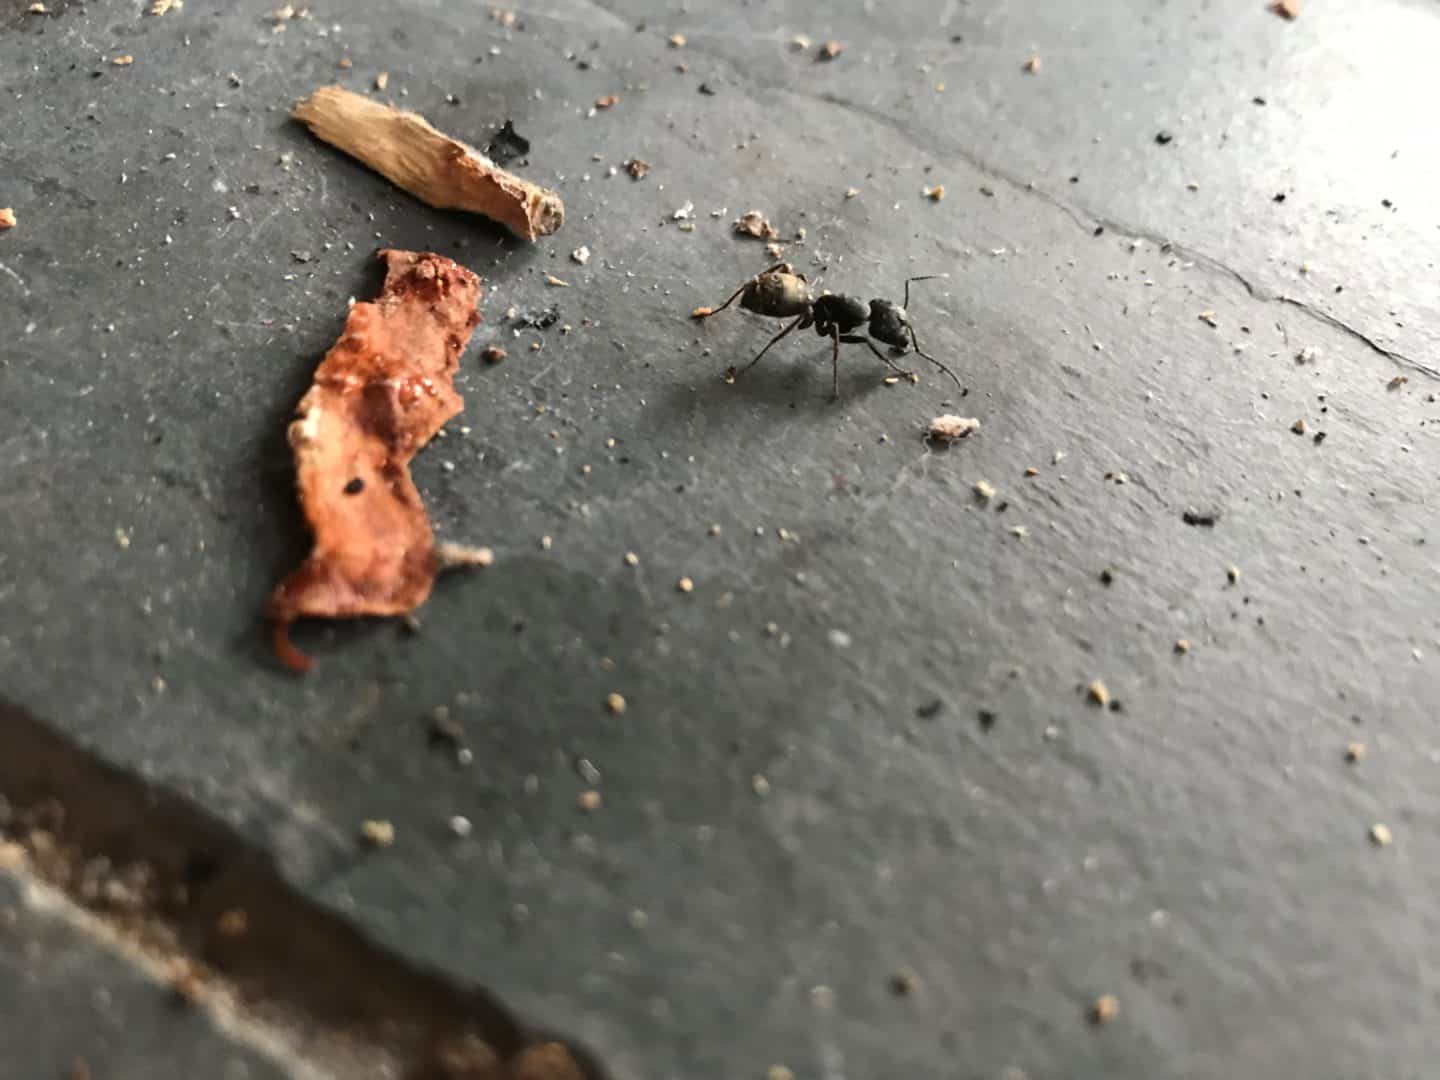 carpenter ant worker